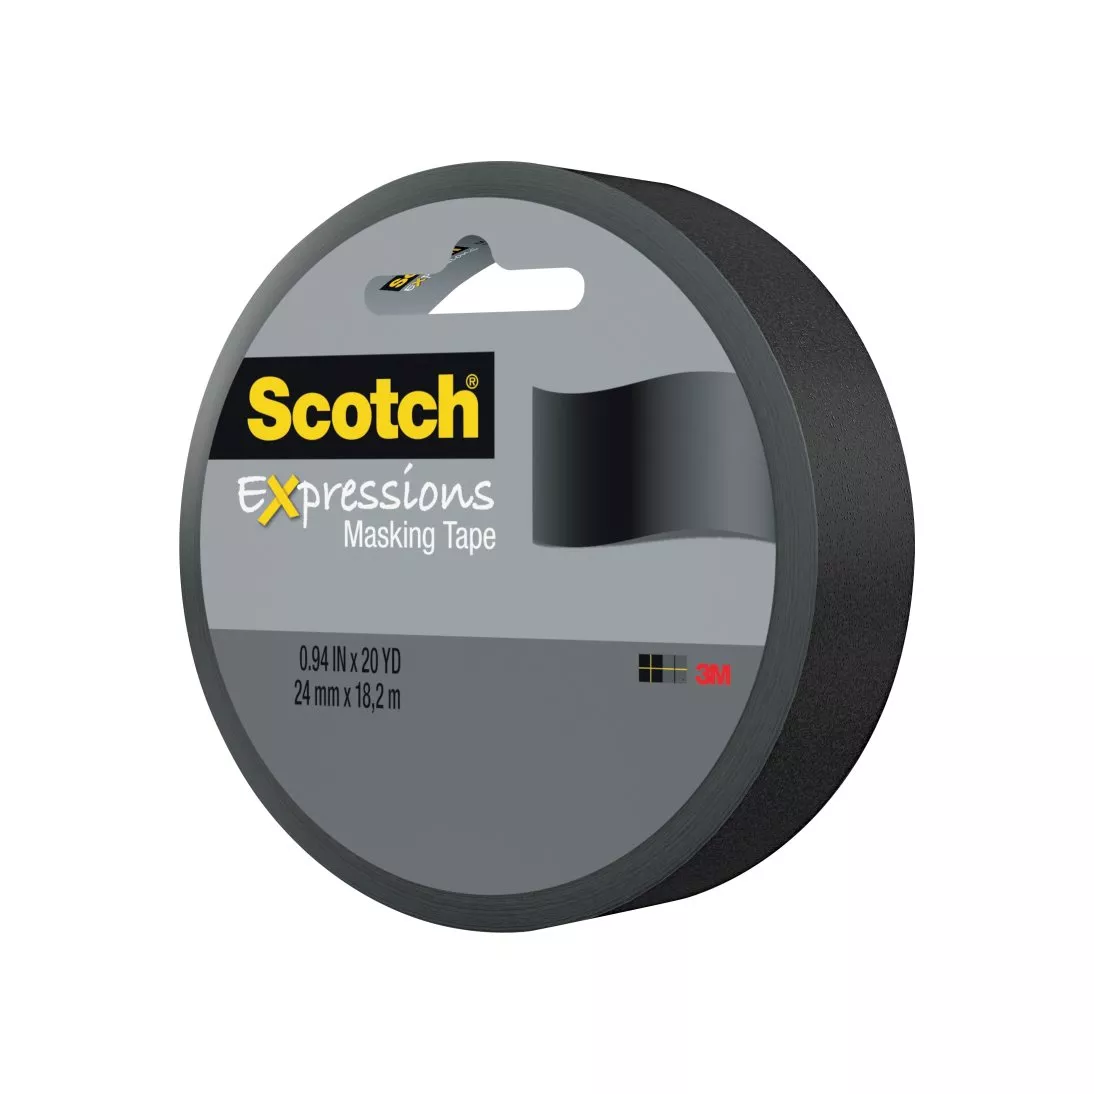 Scotch® Expressions Masking Tape 3437-BLK, .94 in x 20 yd (24 mm x 18,2
m) Black